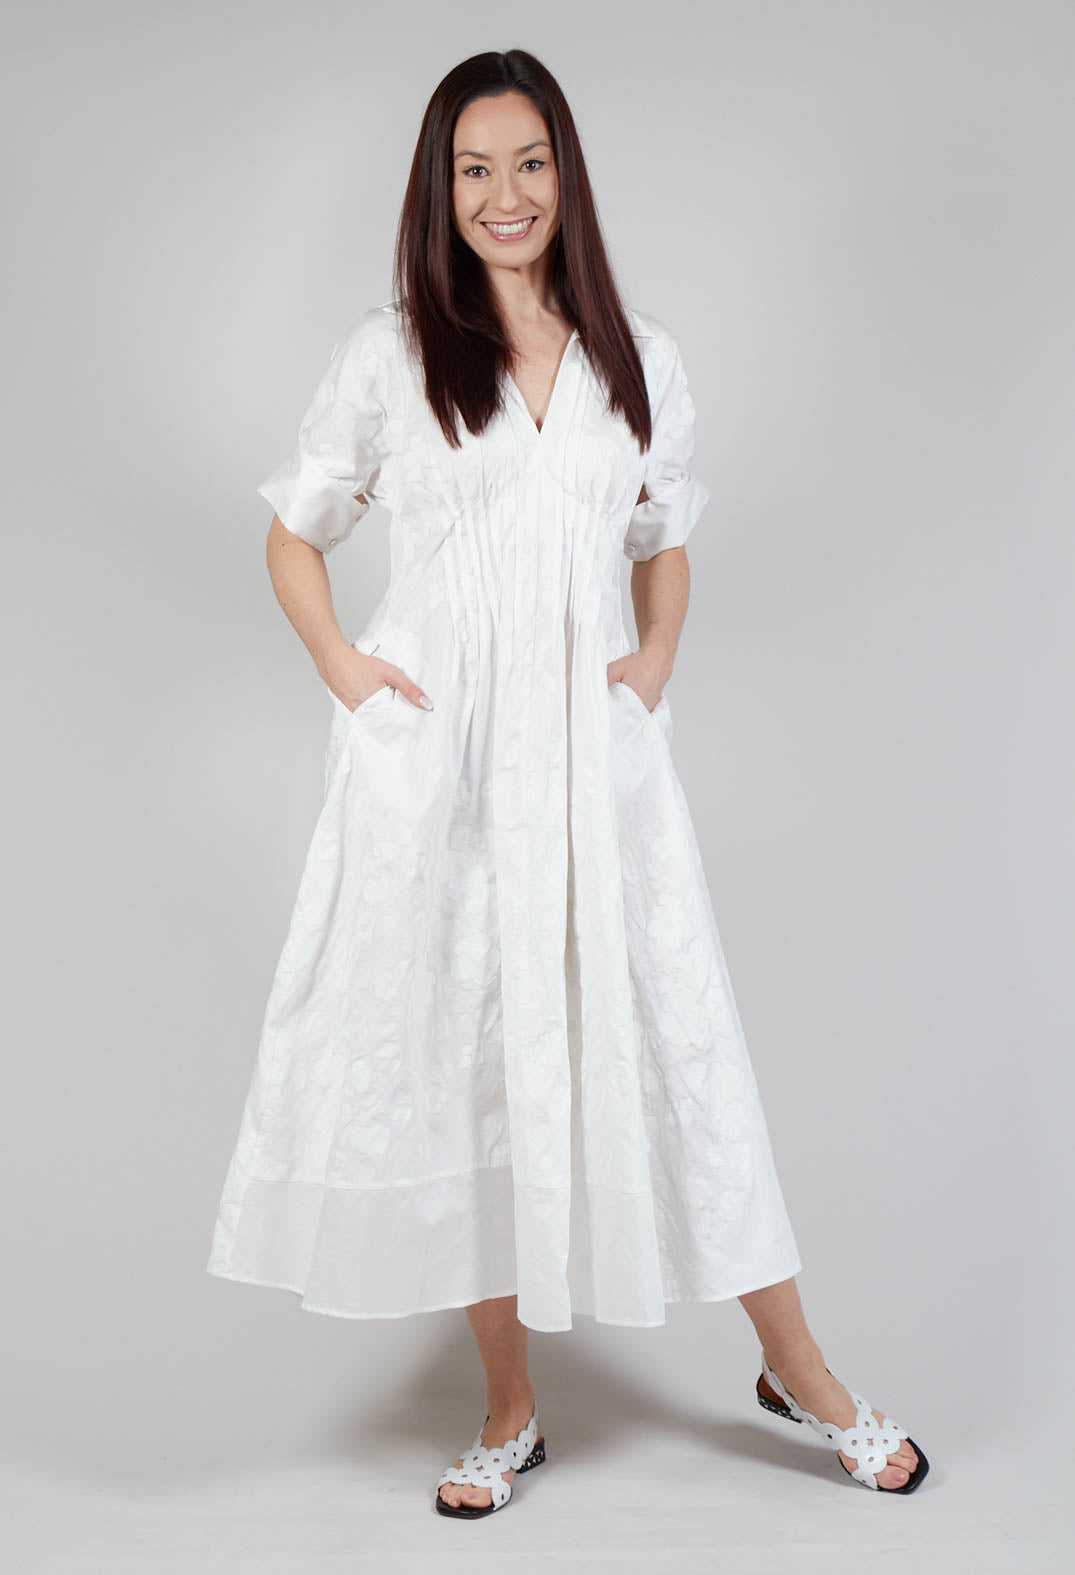 Seersucker Print Dress in White